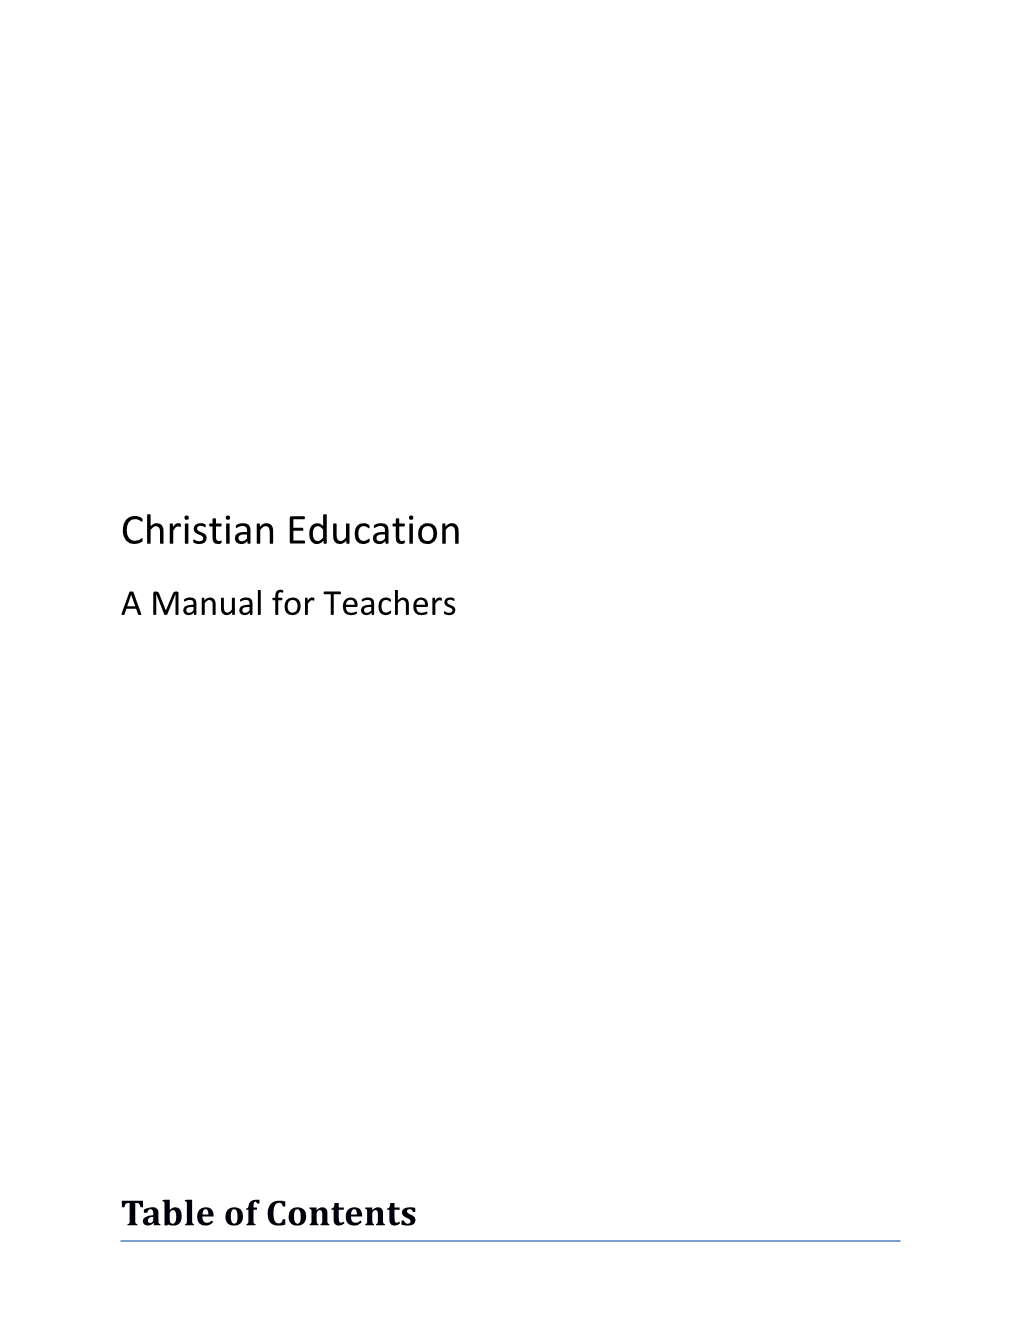 Objectives for the Christian Education Program